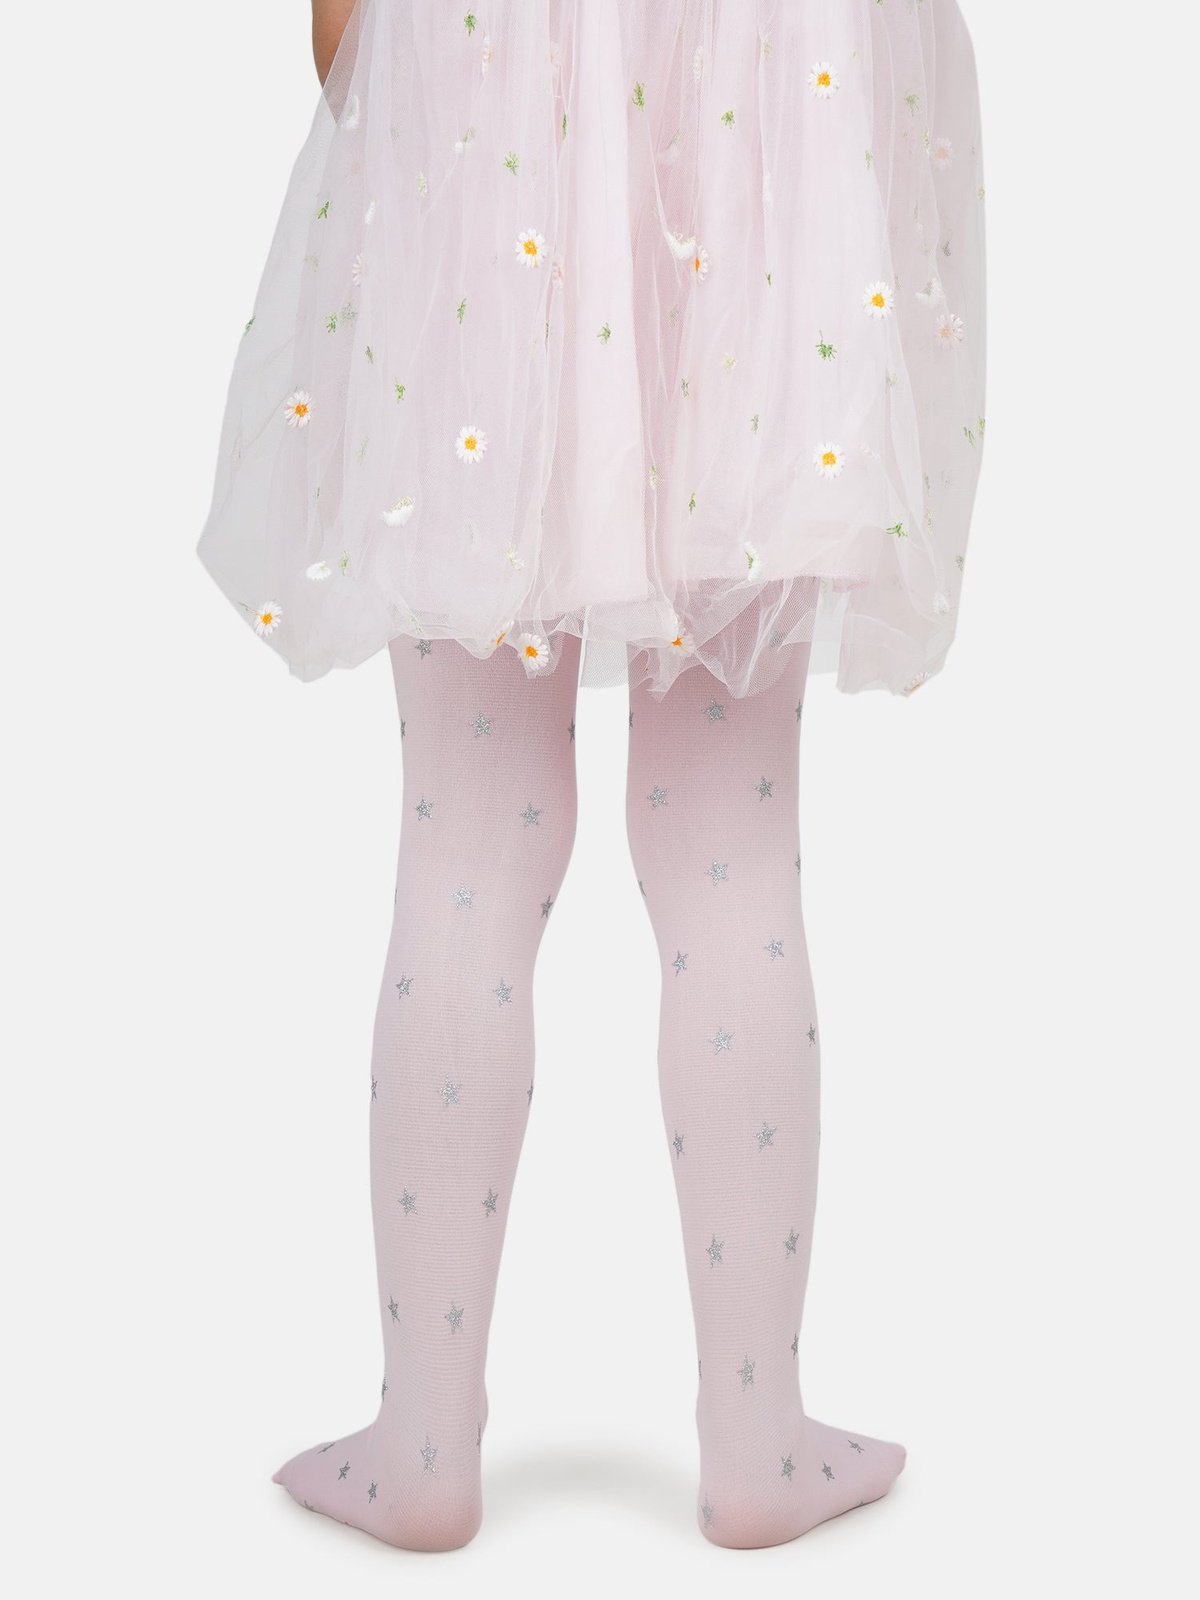 Angel Star Stockings - Baby Pink